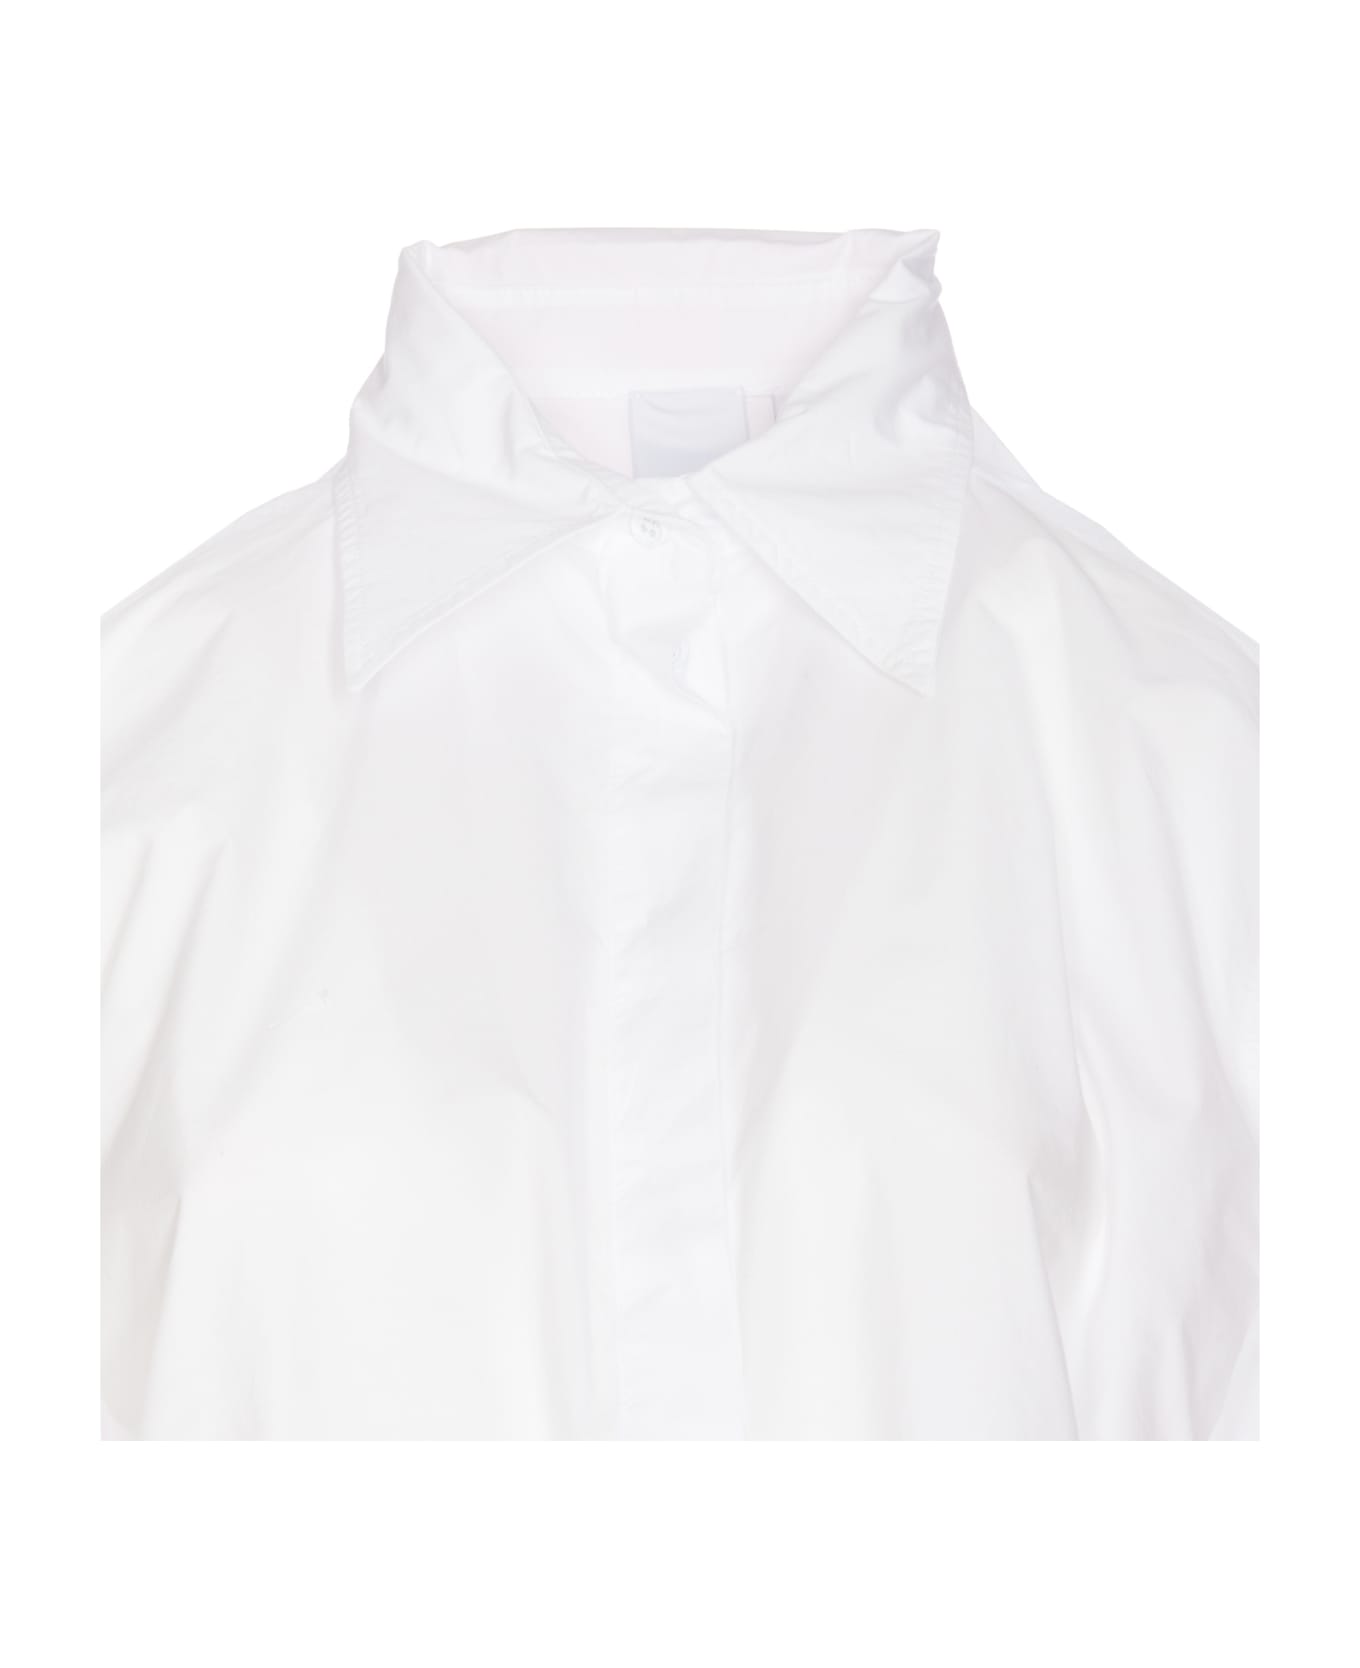 Pinko Canterno Shirt - White シャツ